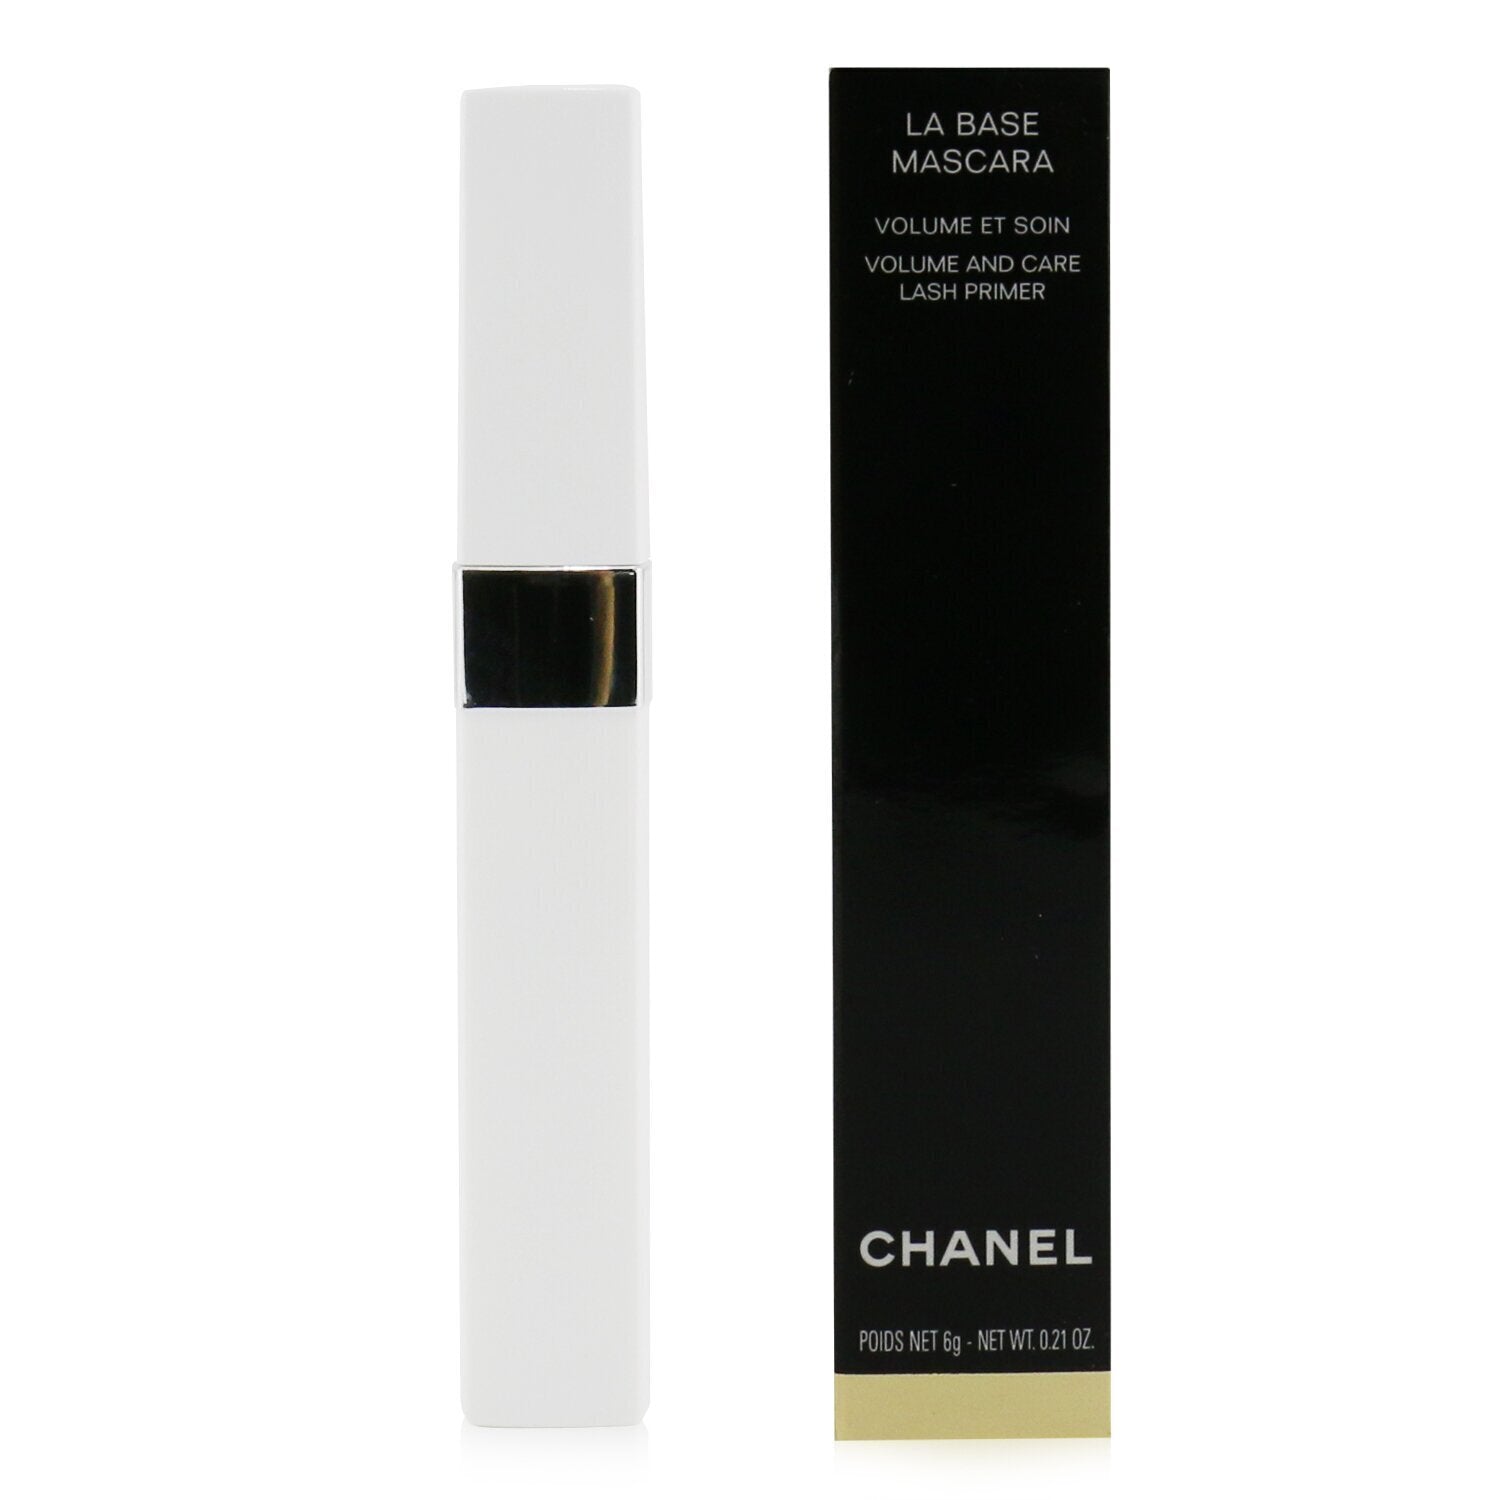 Chanel Le Volume Stretch De Chanel Mascara - # 10 Noir 6g/0.21oz